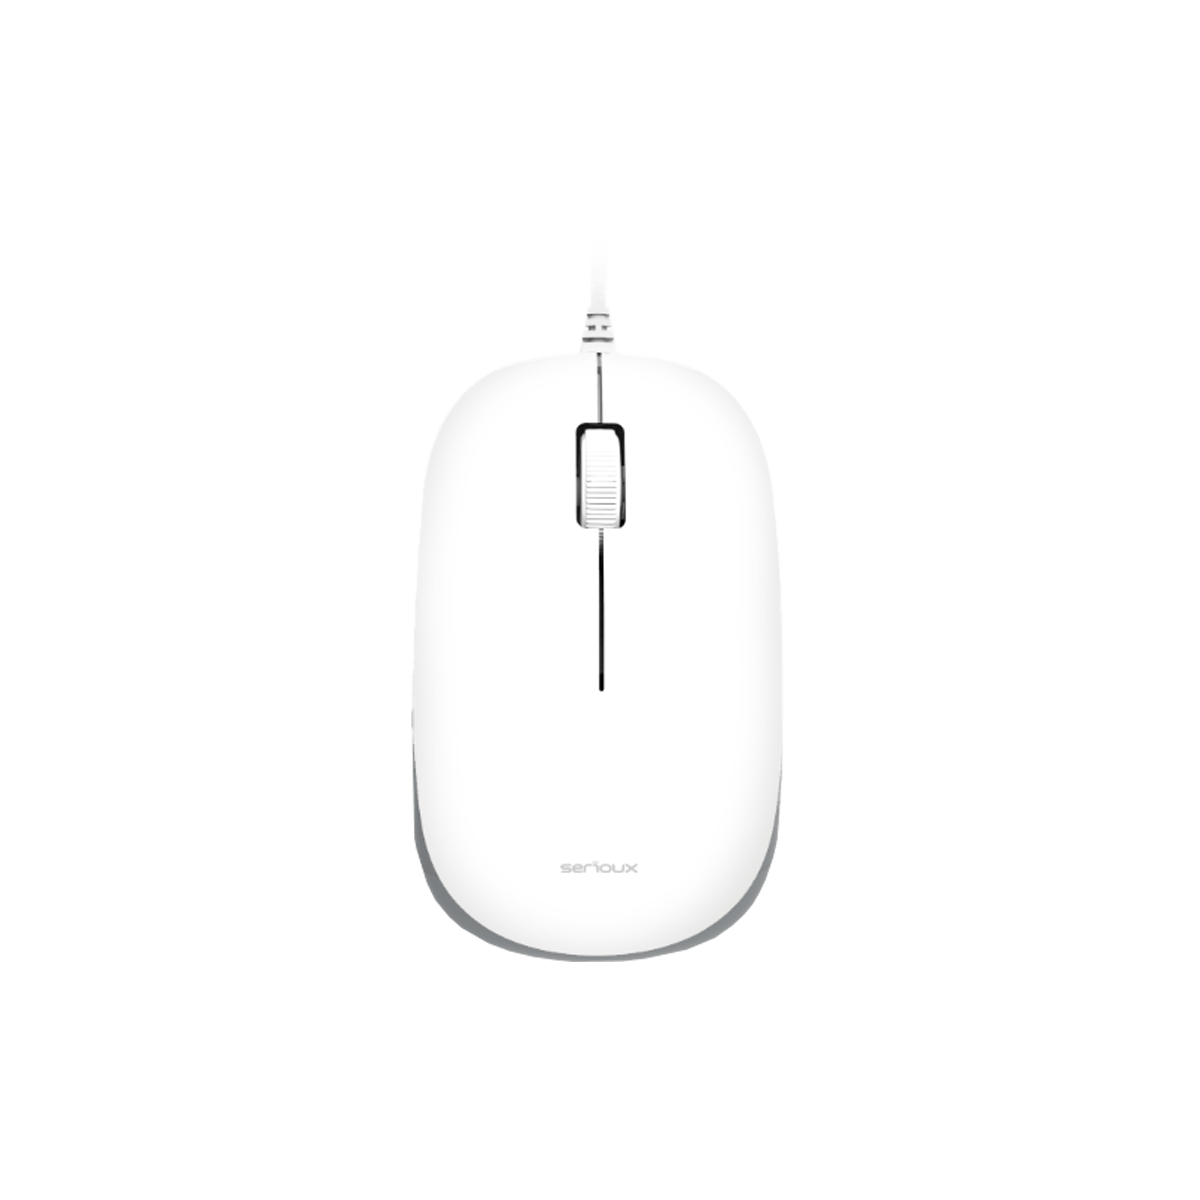 Mouse Optic 9800WHT, 1